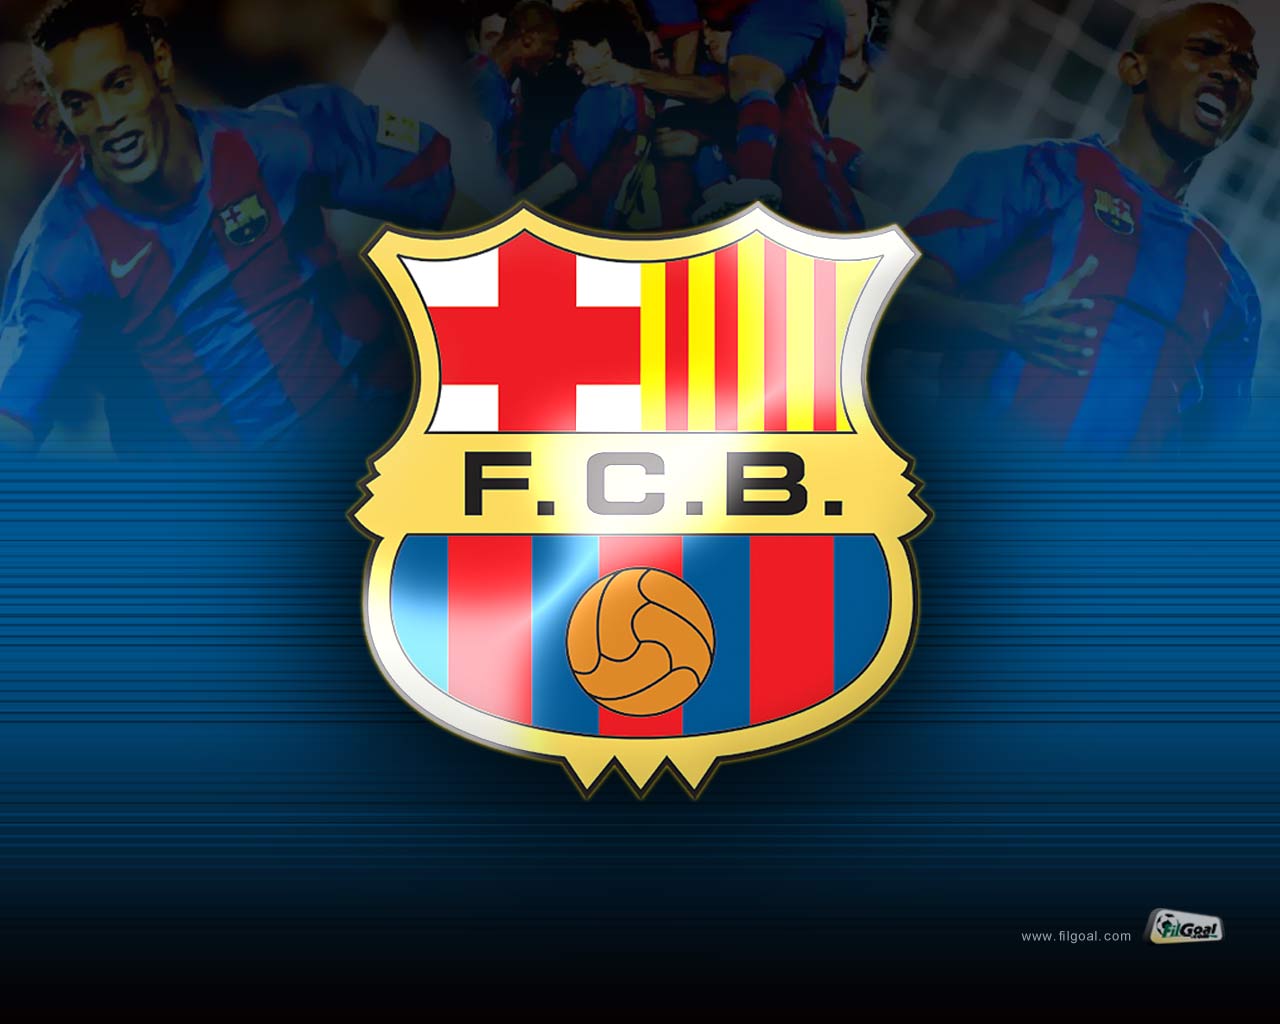 FC Barcelona Wallpapers fc barcelona 484411 1280 1024jpg 1280x1024